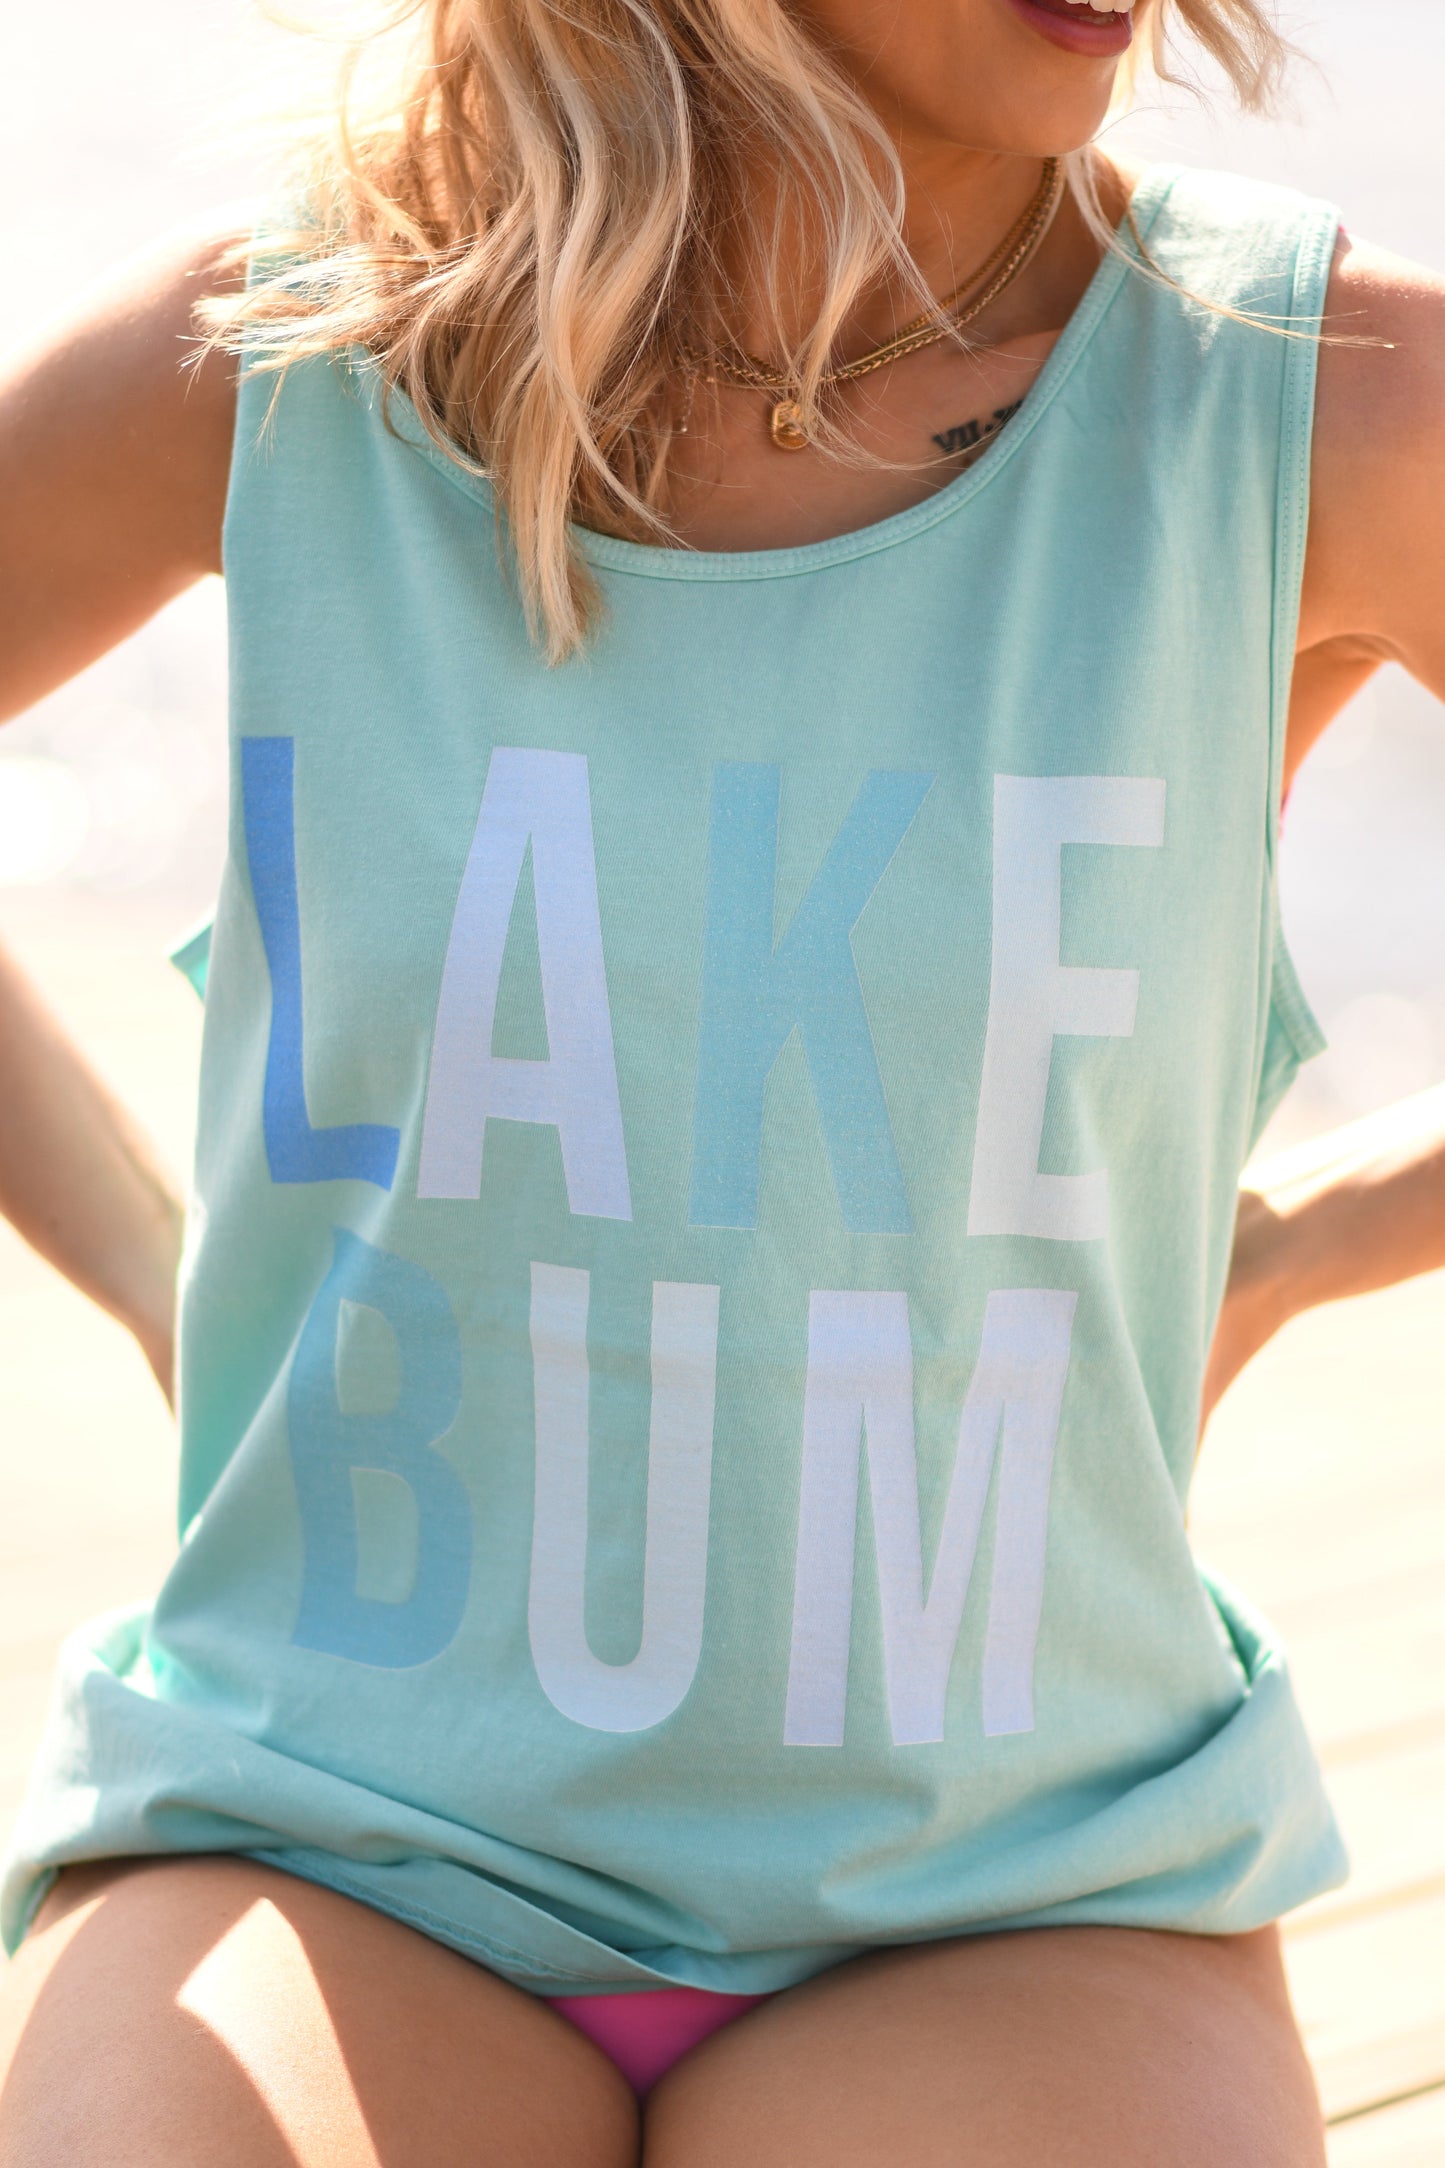 Lake Bum Tank/Tee